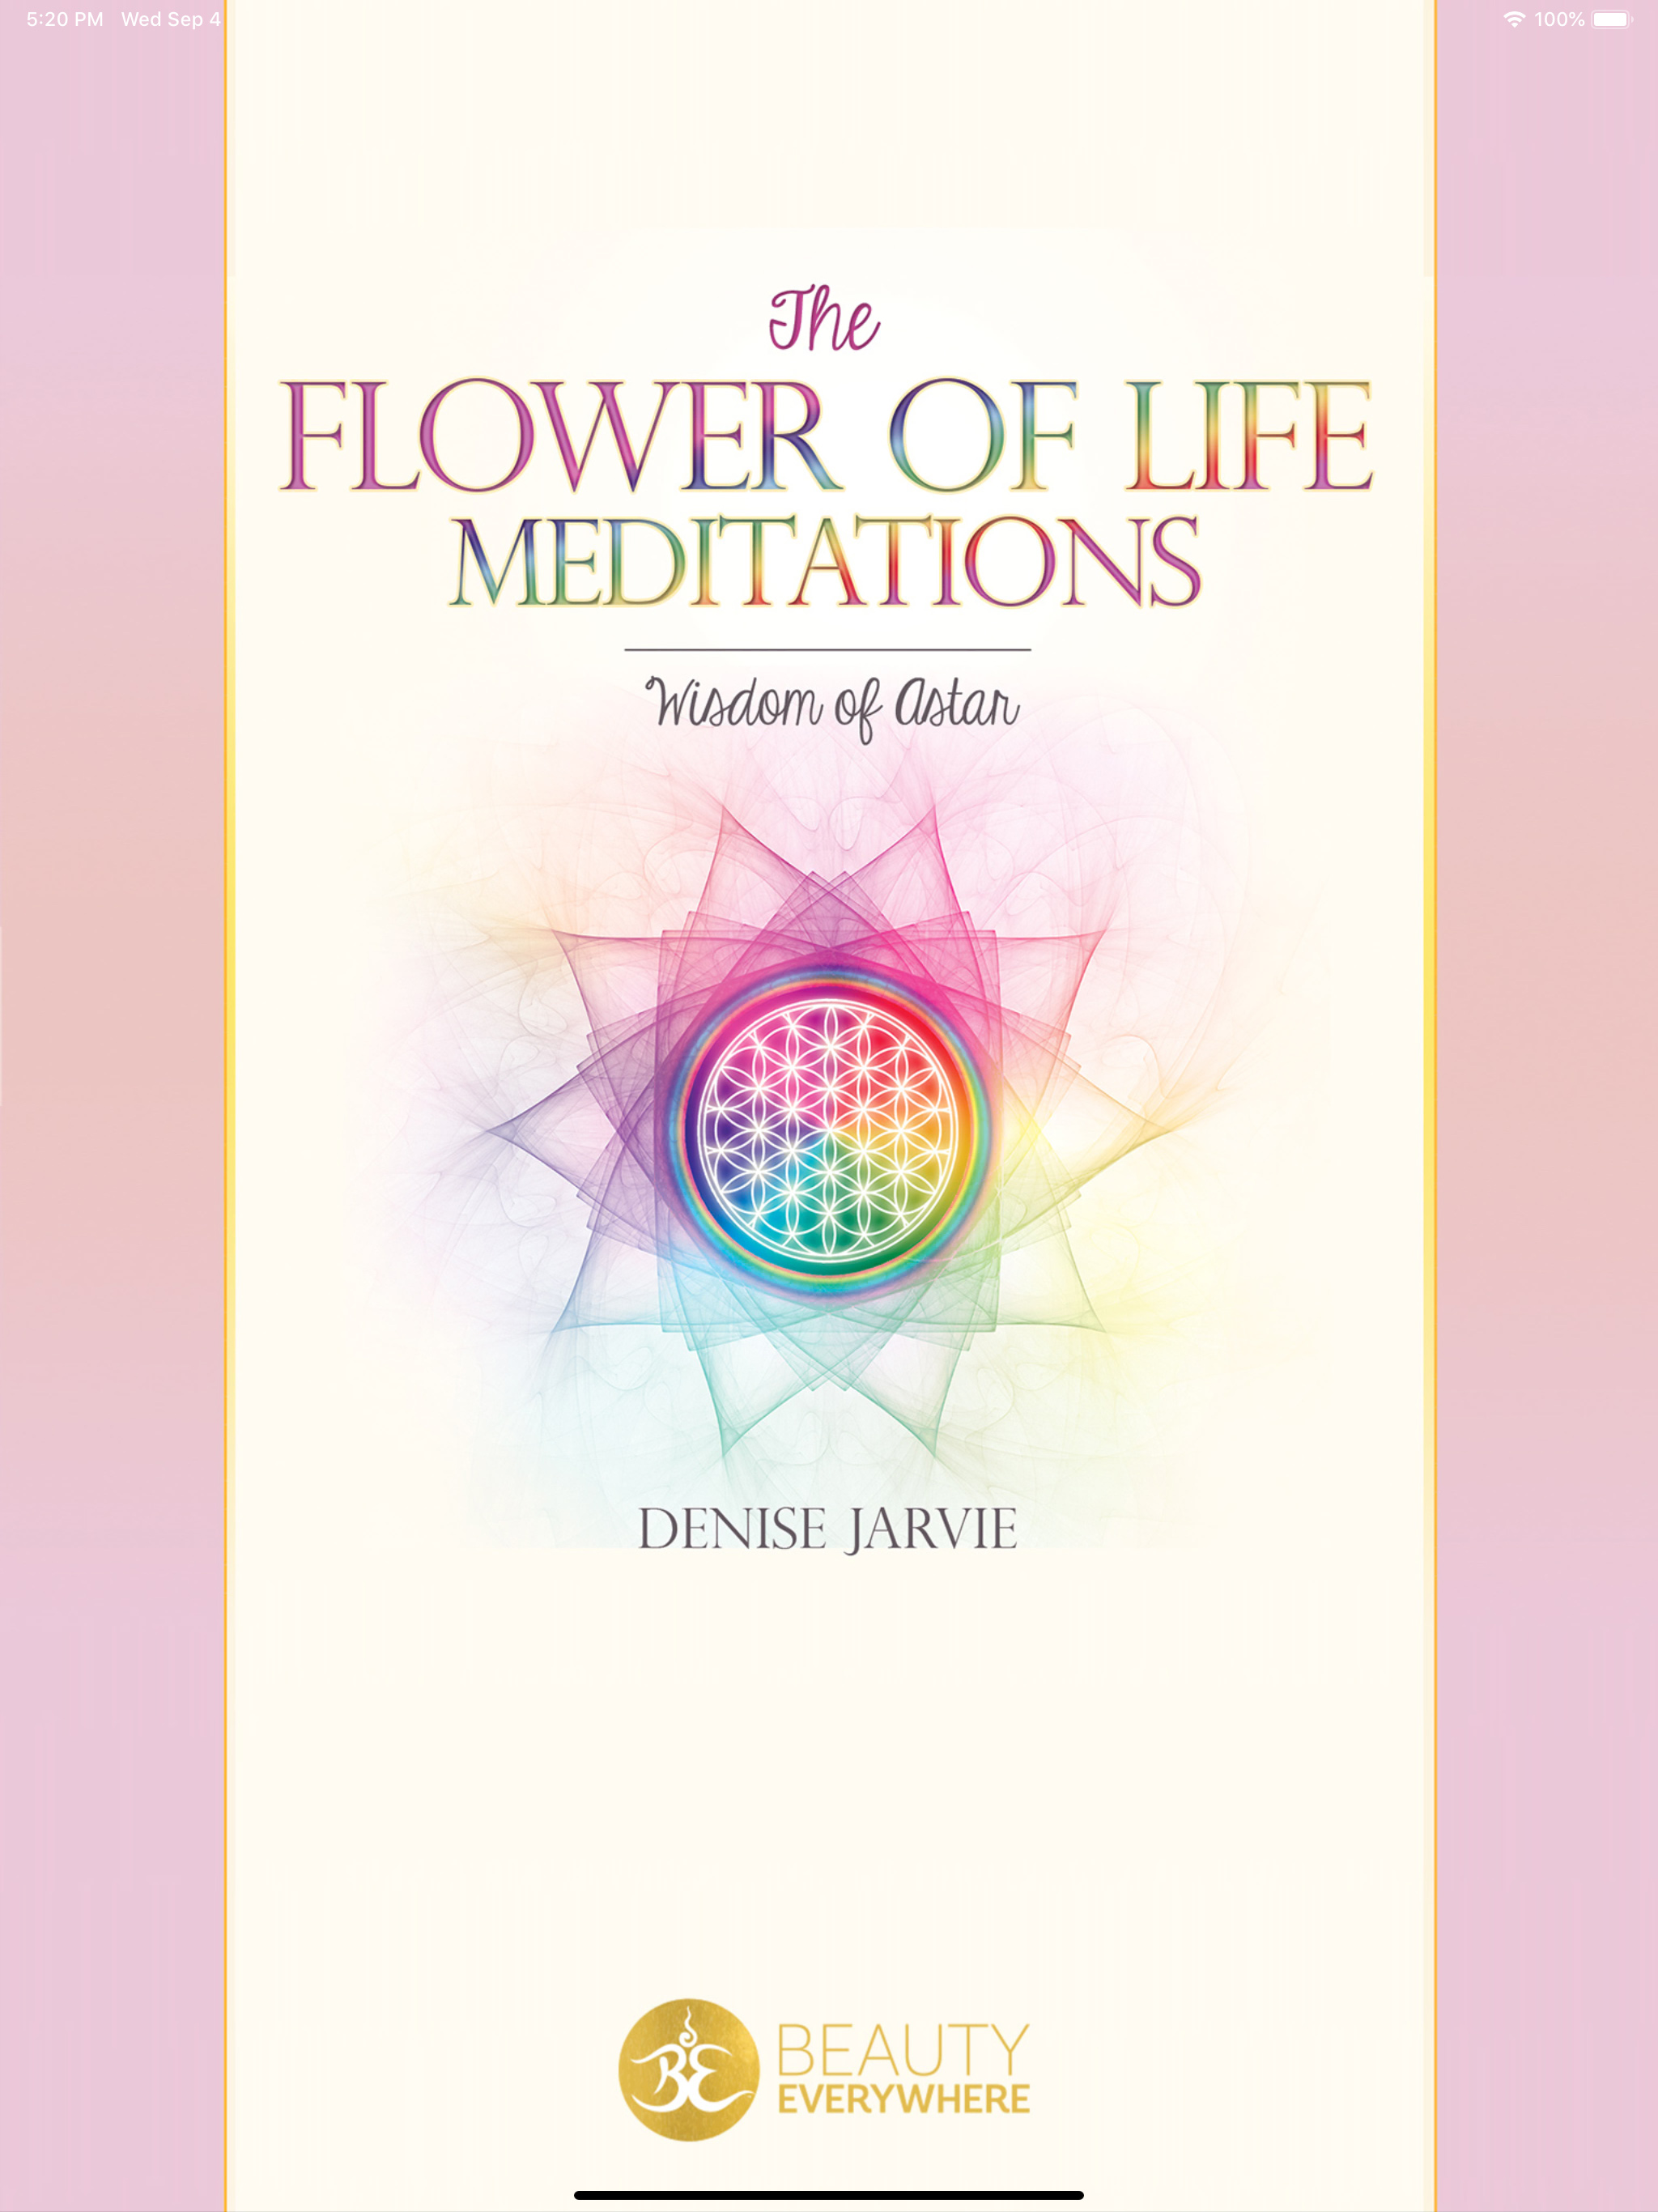 Flower of Life Meditations by Denise Jarvie